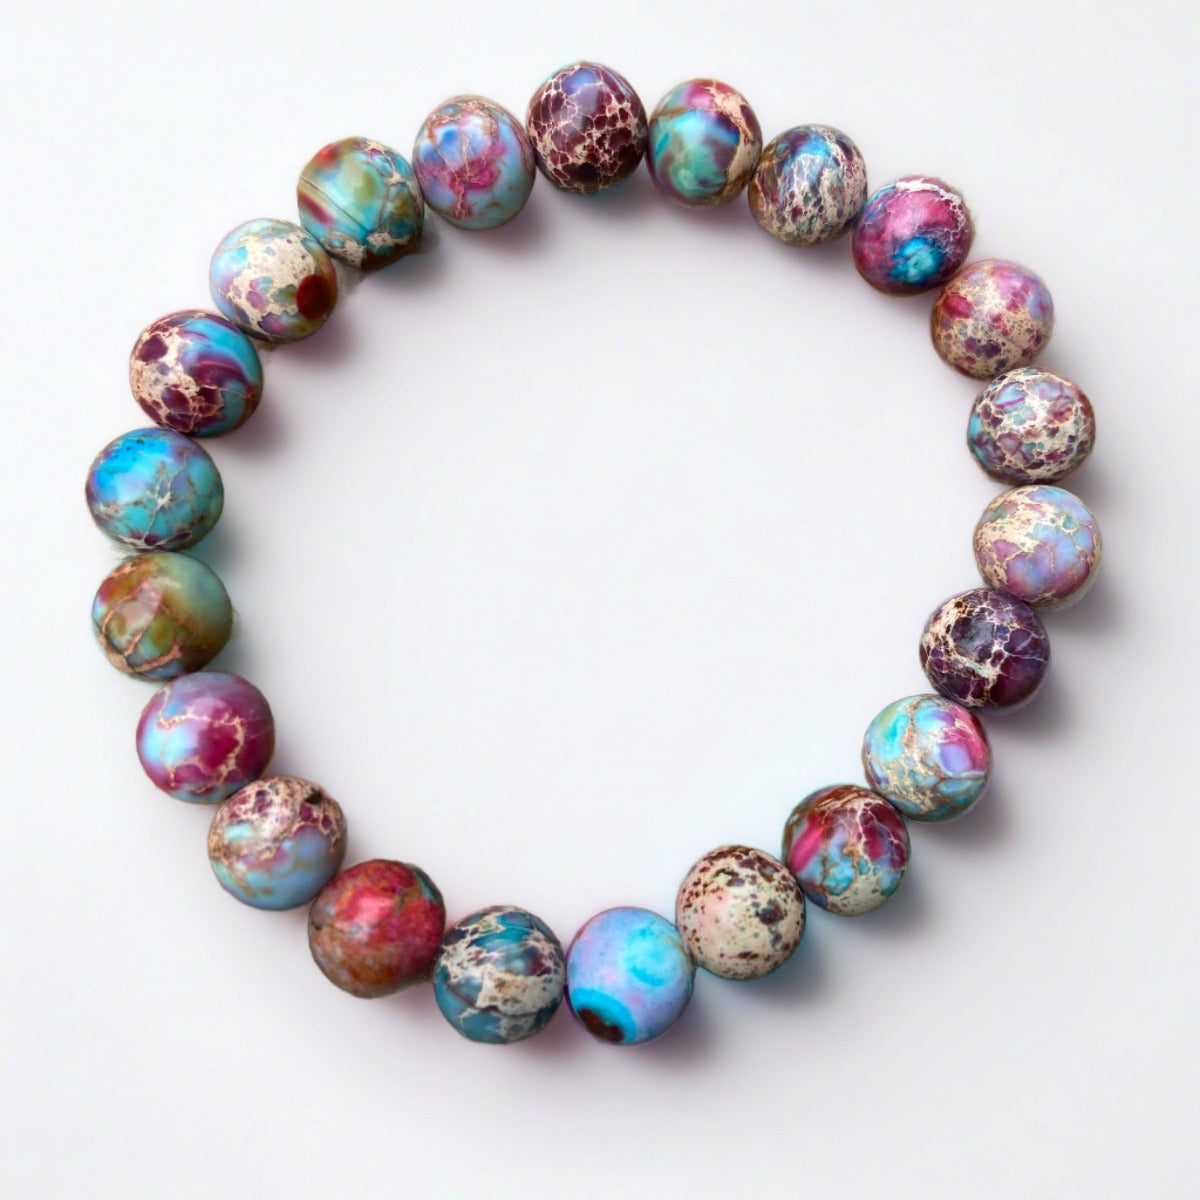 Pink Sapphire Necklace - Earthly Abundance